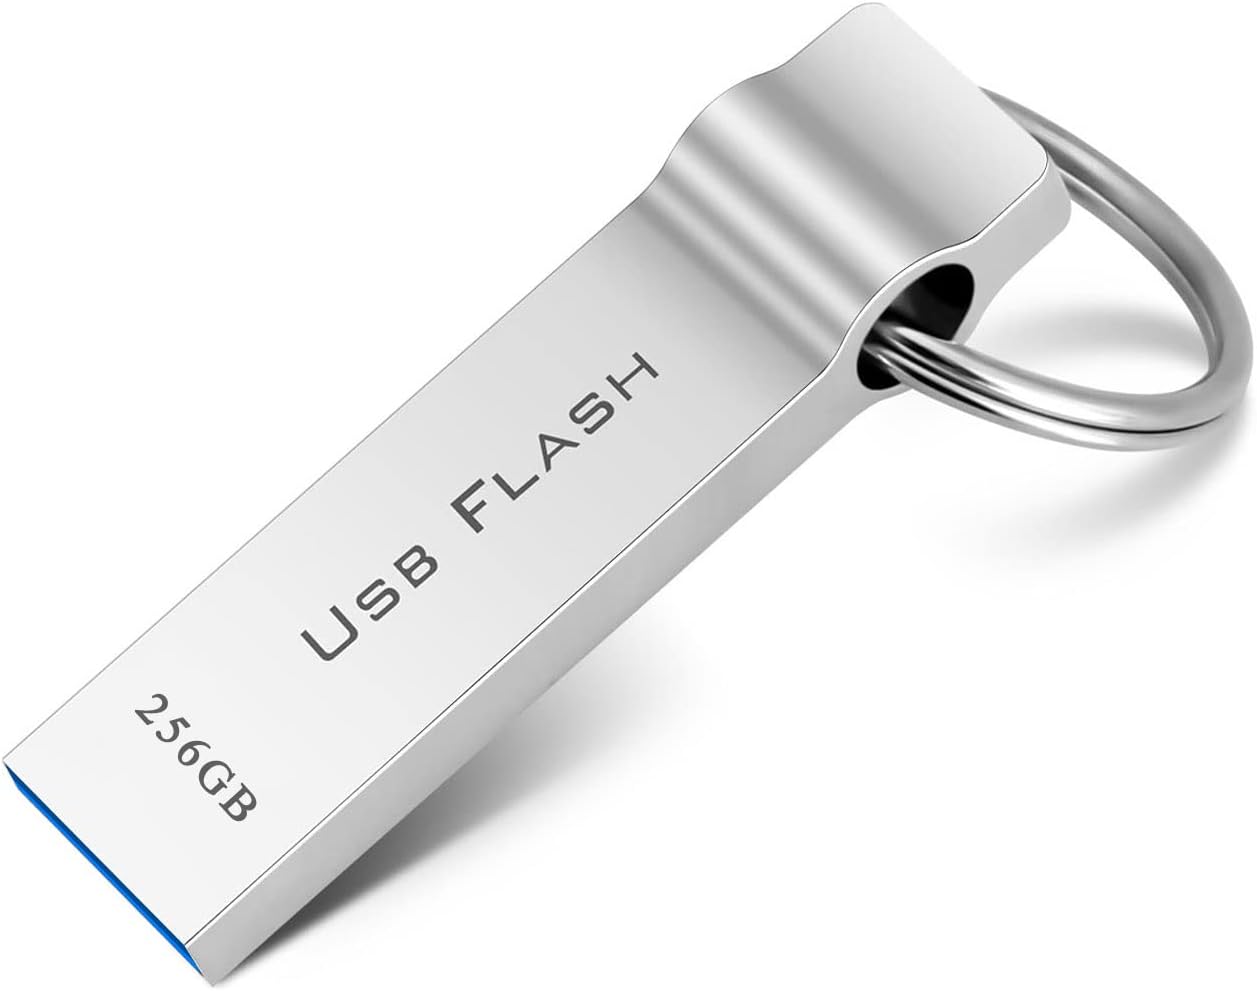 Marryler USB Flash Drive 256GB Waterproof USB Drive [...]